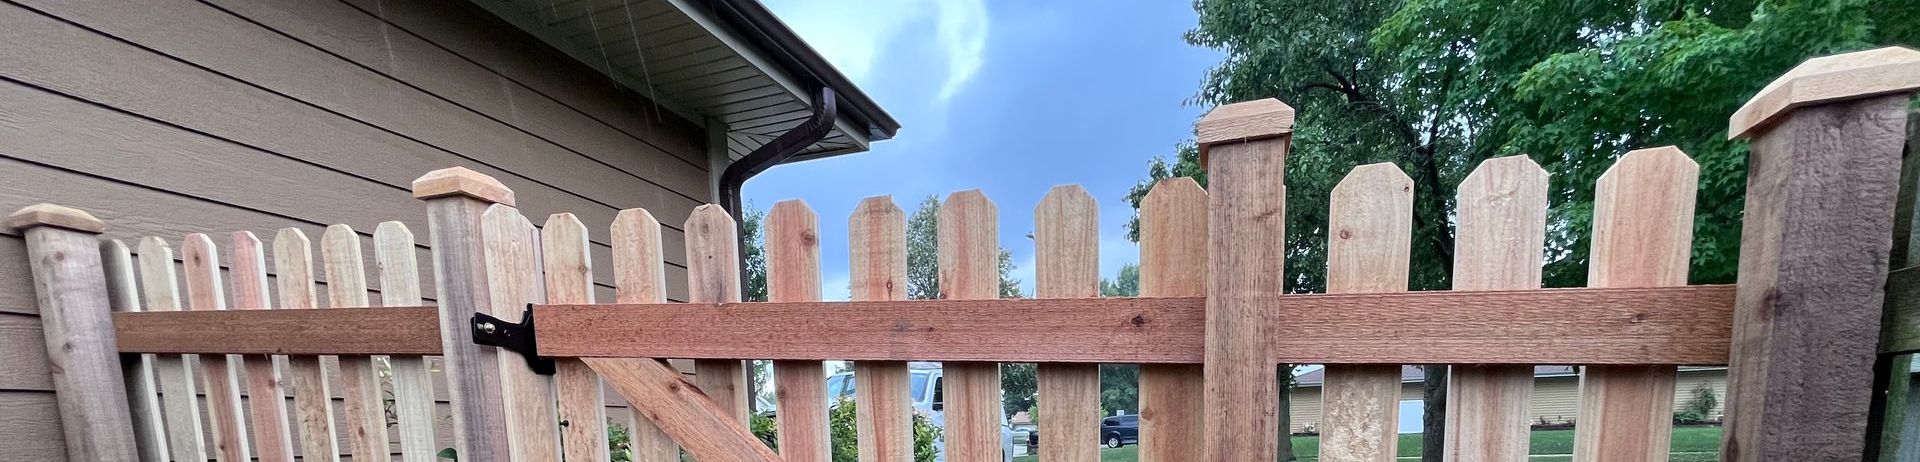 fence post caps installation illinois